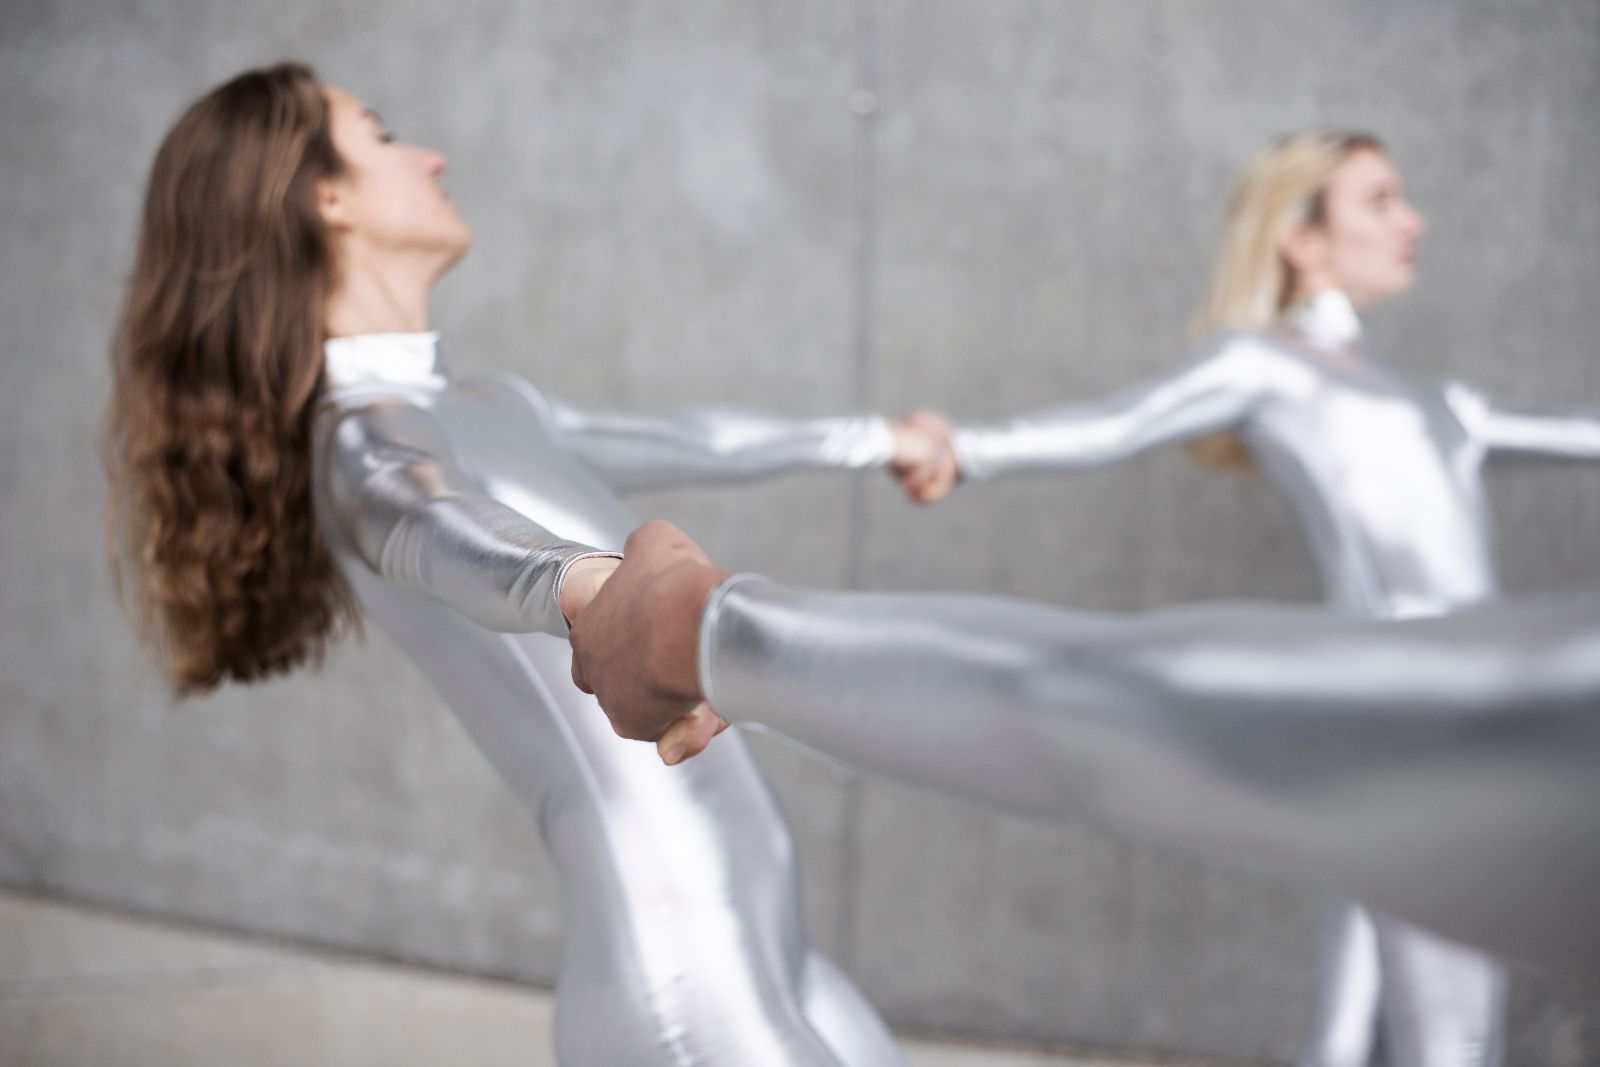 Dancers dressed in silver bodysuits perform Taneli Törmä's work ALIEN in outdoor public spaces